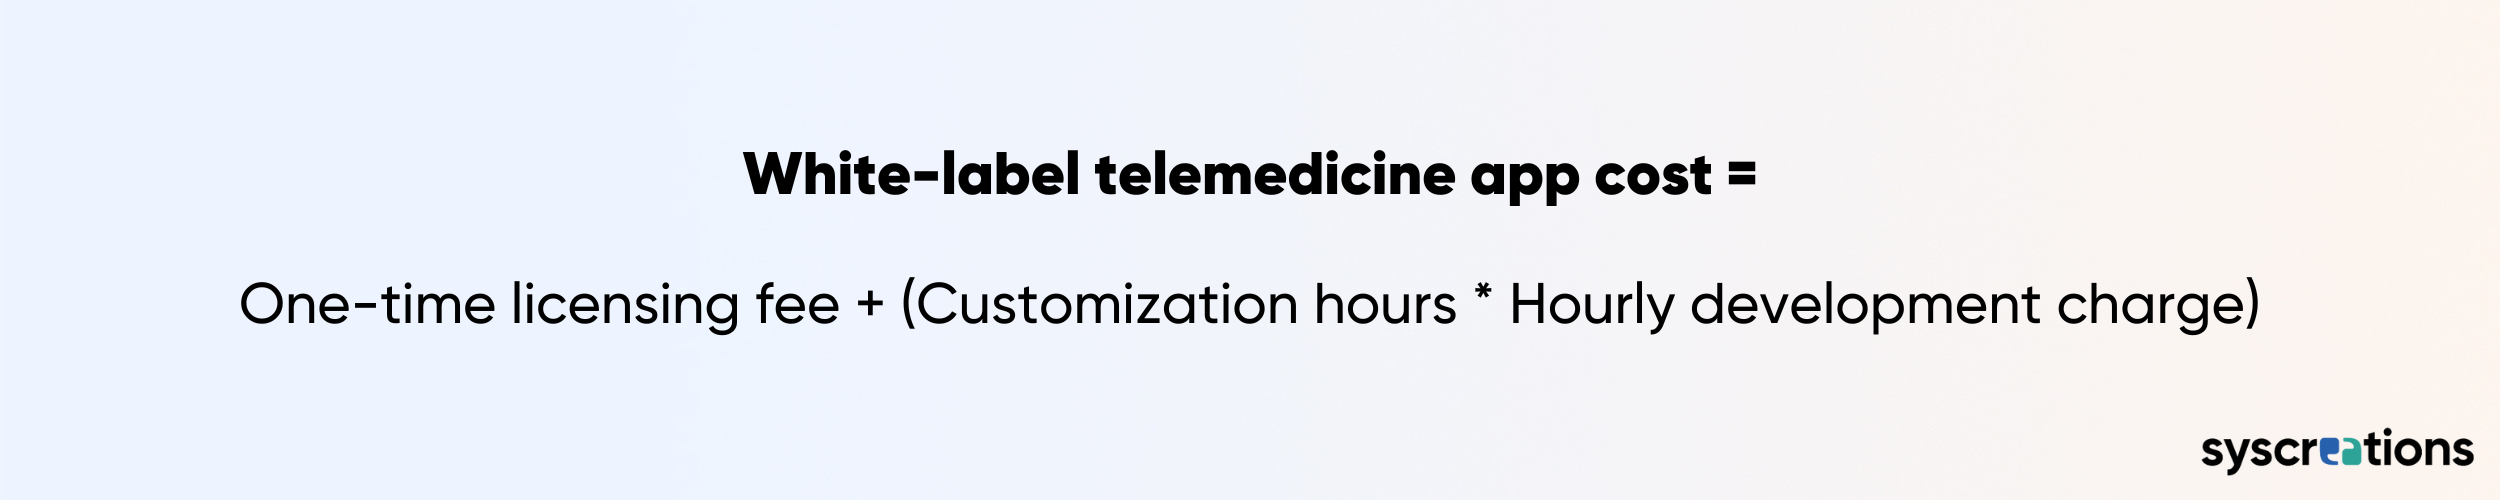 White-label telemedicine app